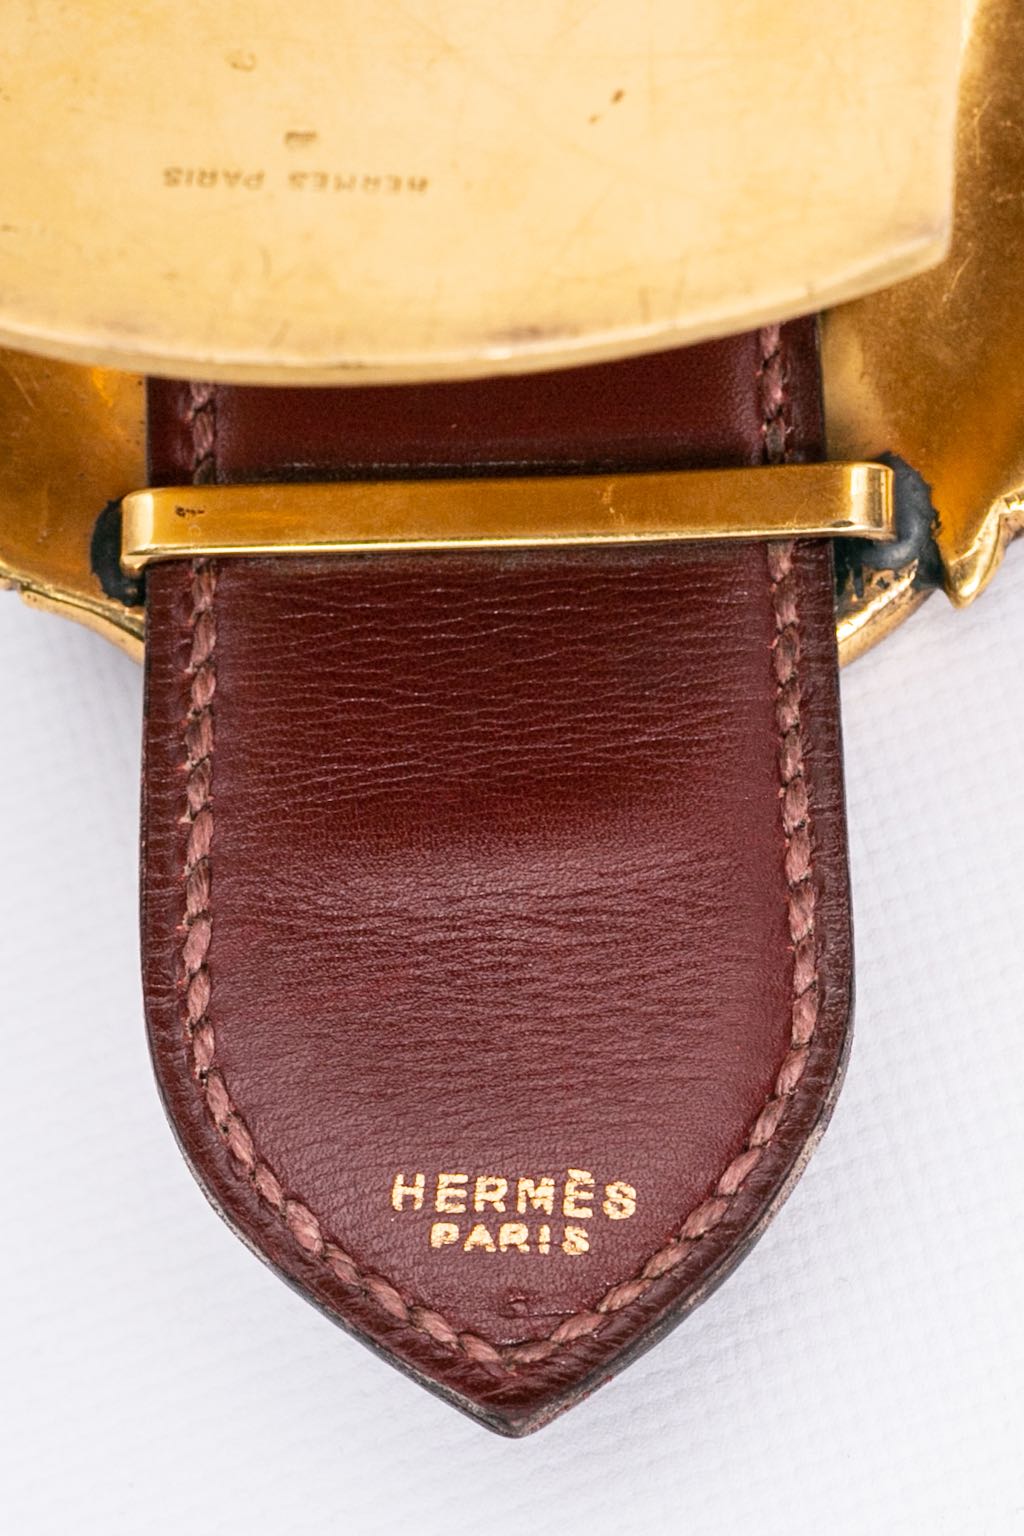 Hermès paperweight